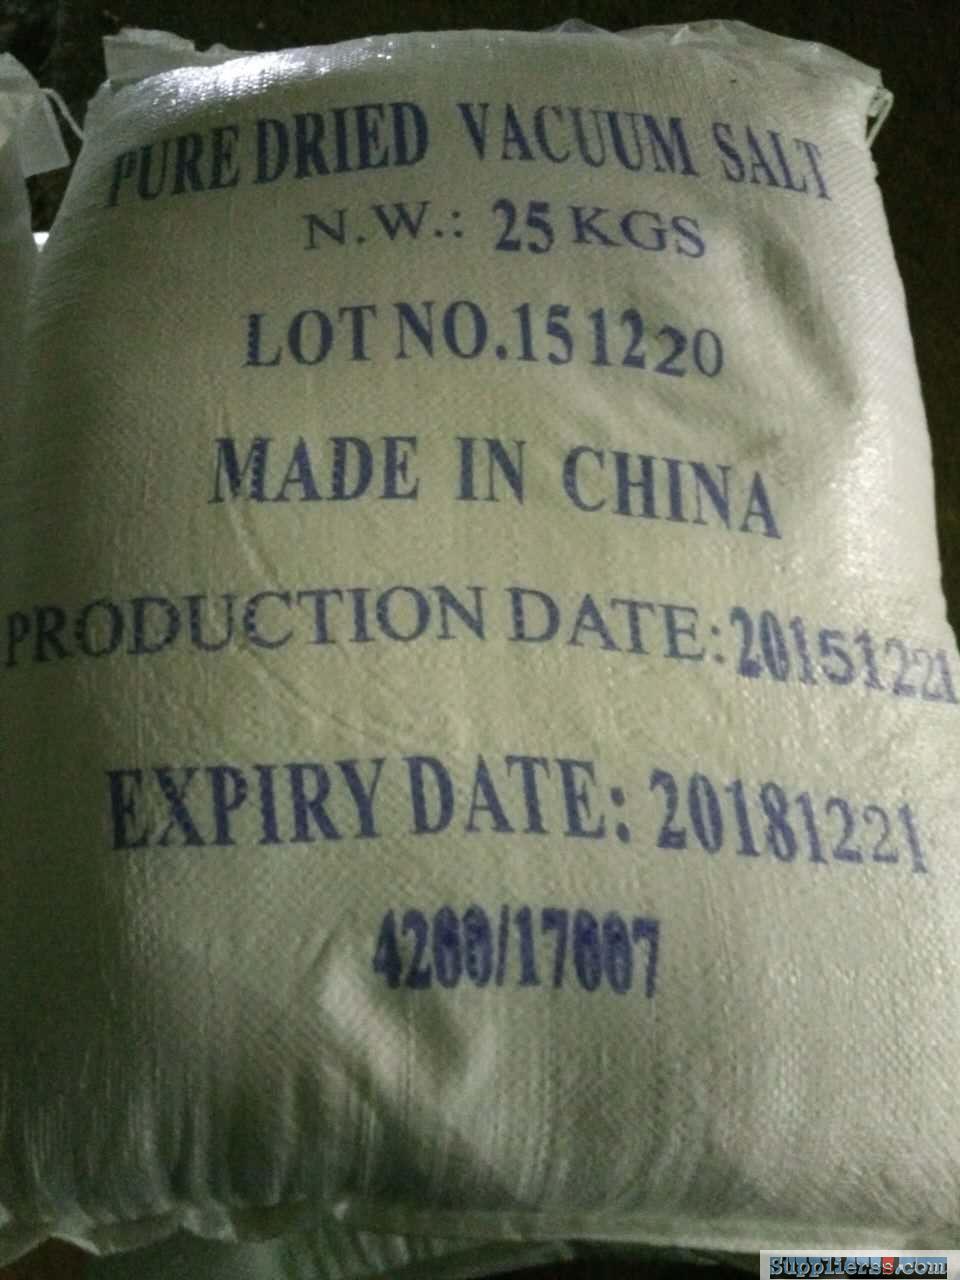 PDV Salt(pure dried vacuum salt), Industrial grade Salt, Vacuum Salt